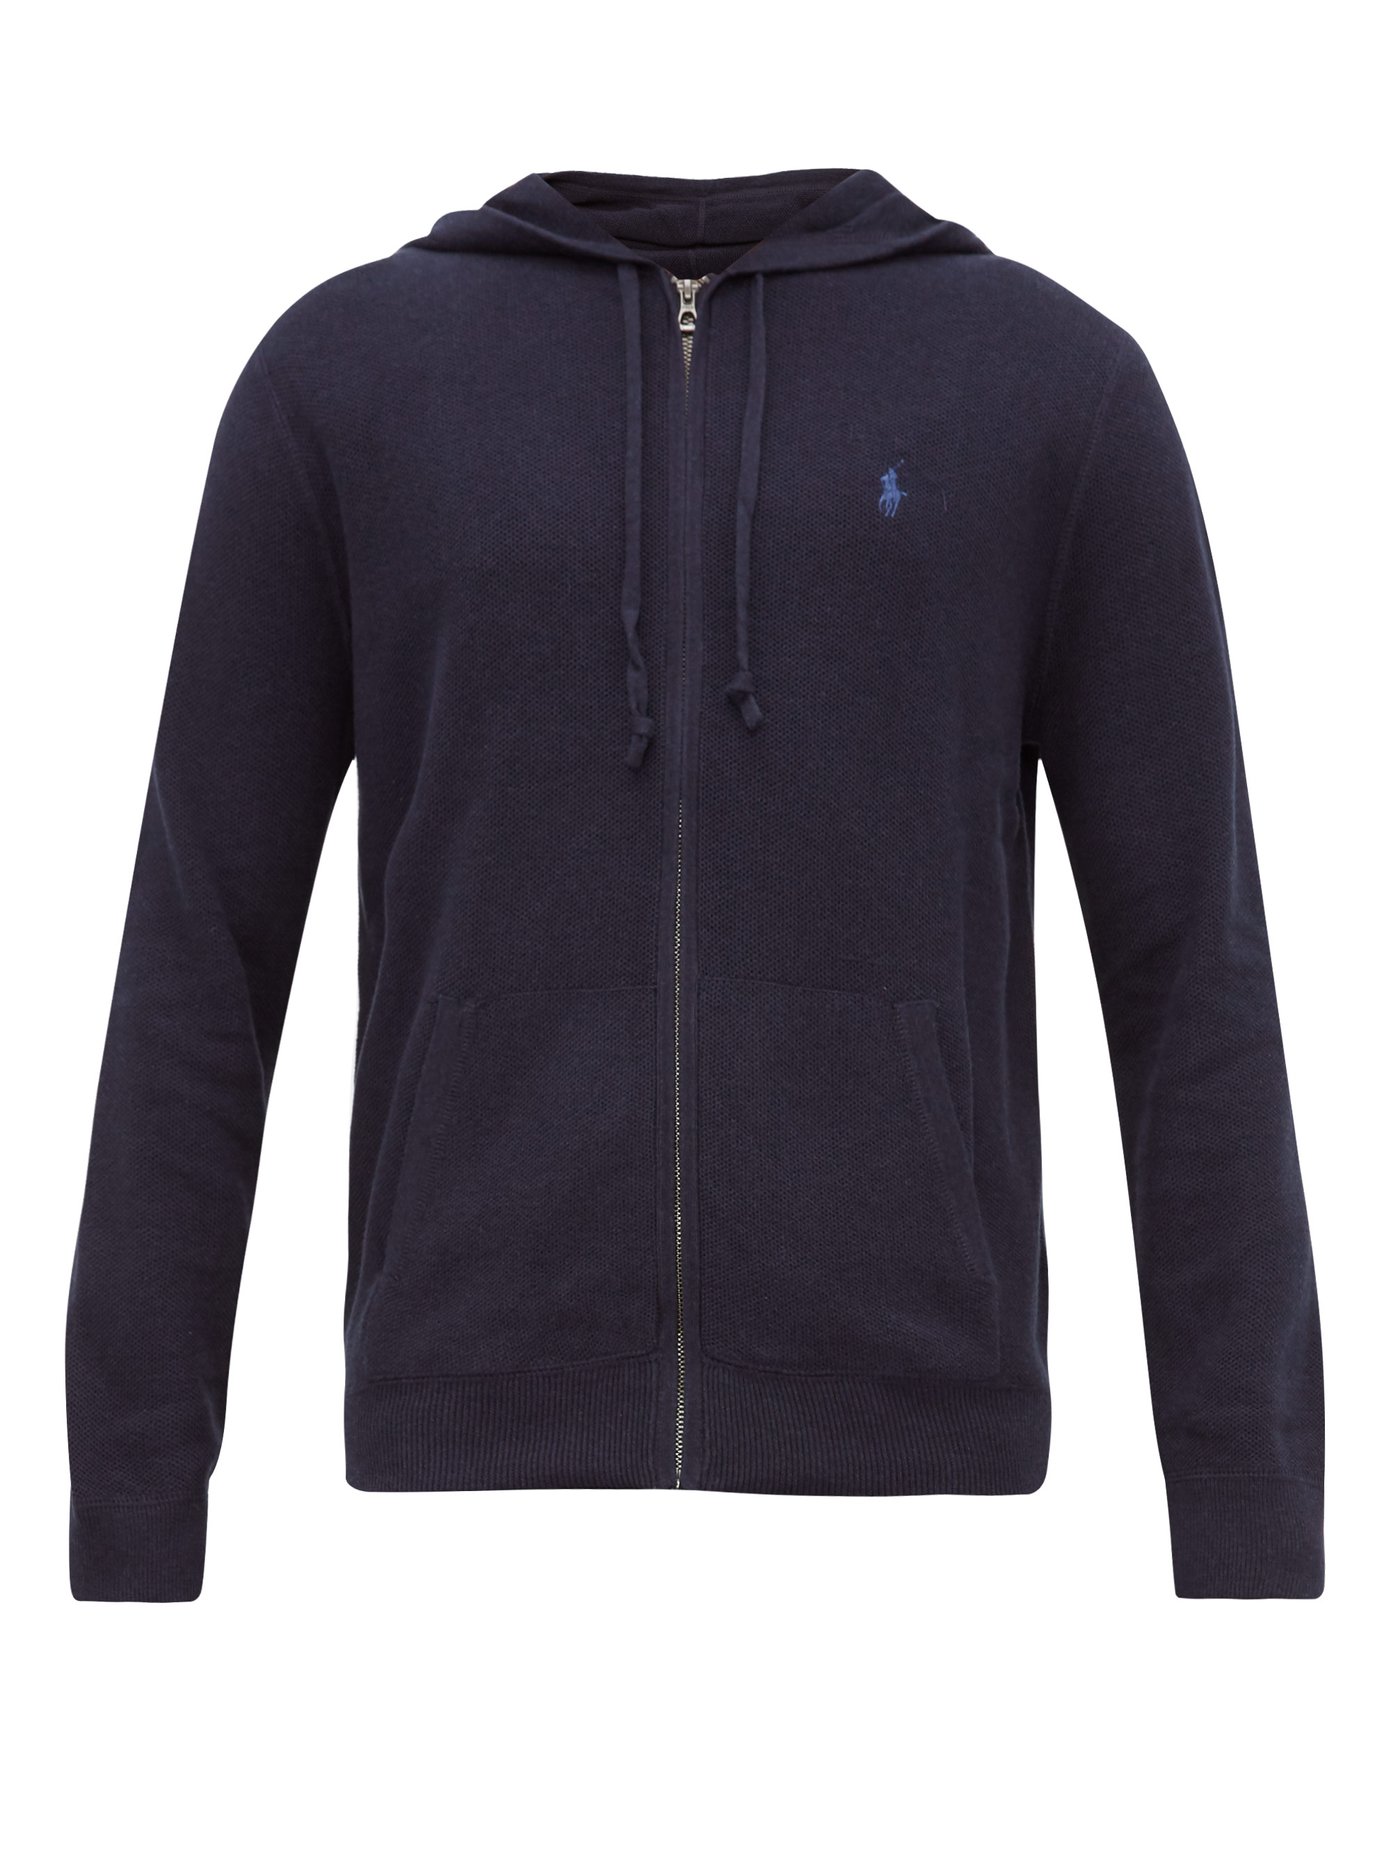 polo ralph lauren zipped logo hooded sweatshirt